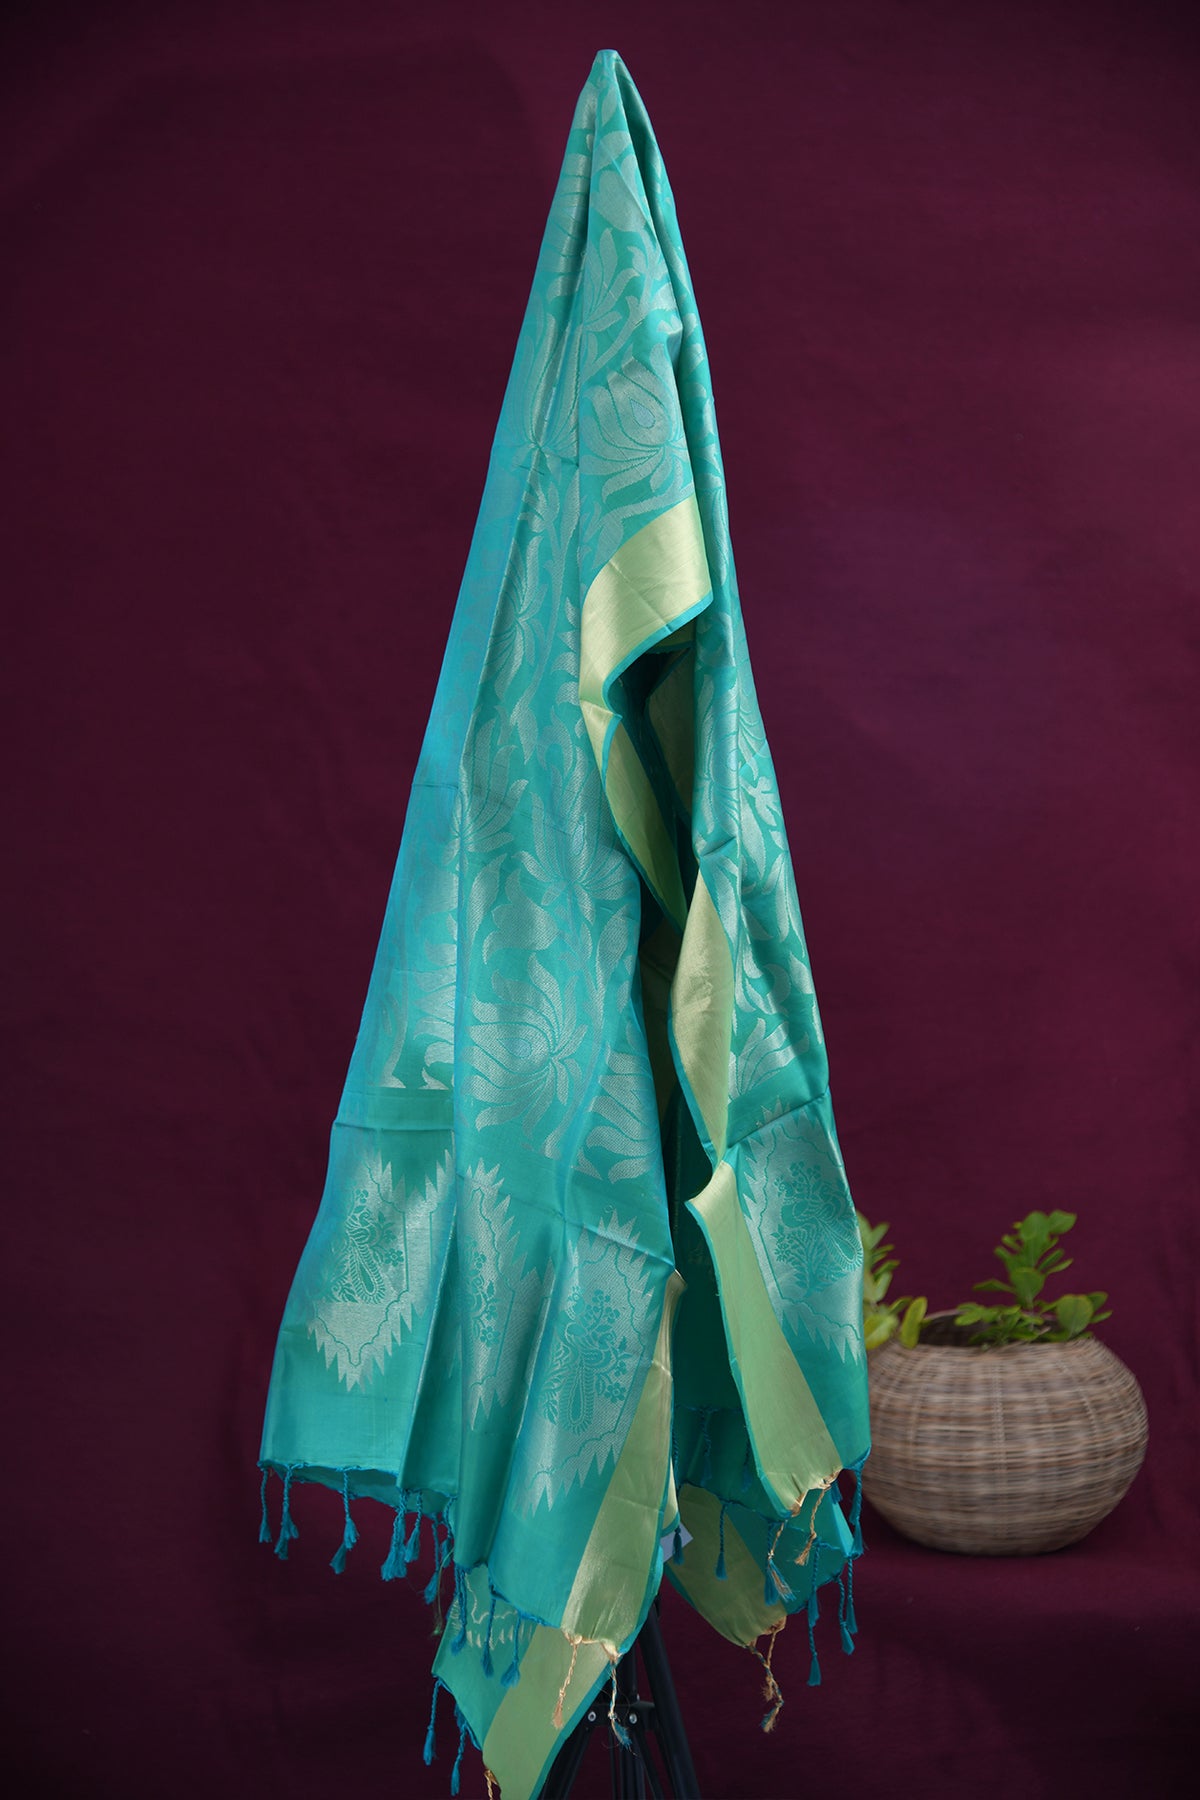 Floral Design Sea Green Soft Silk Dupatta